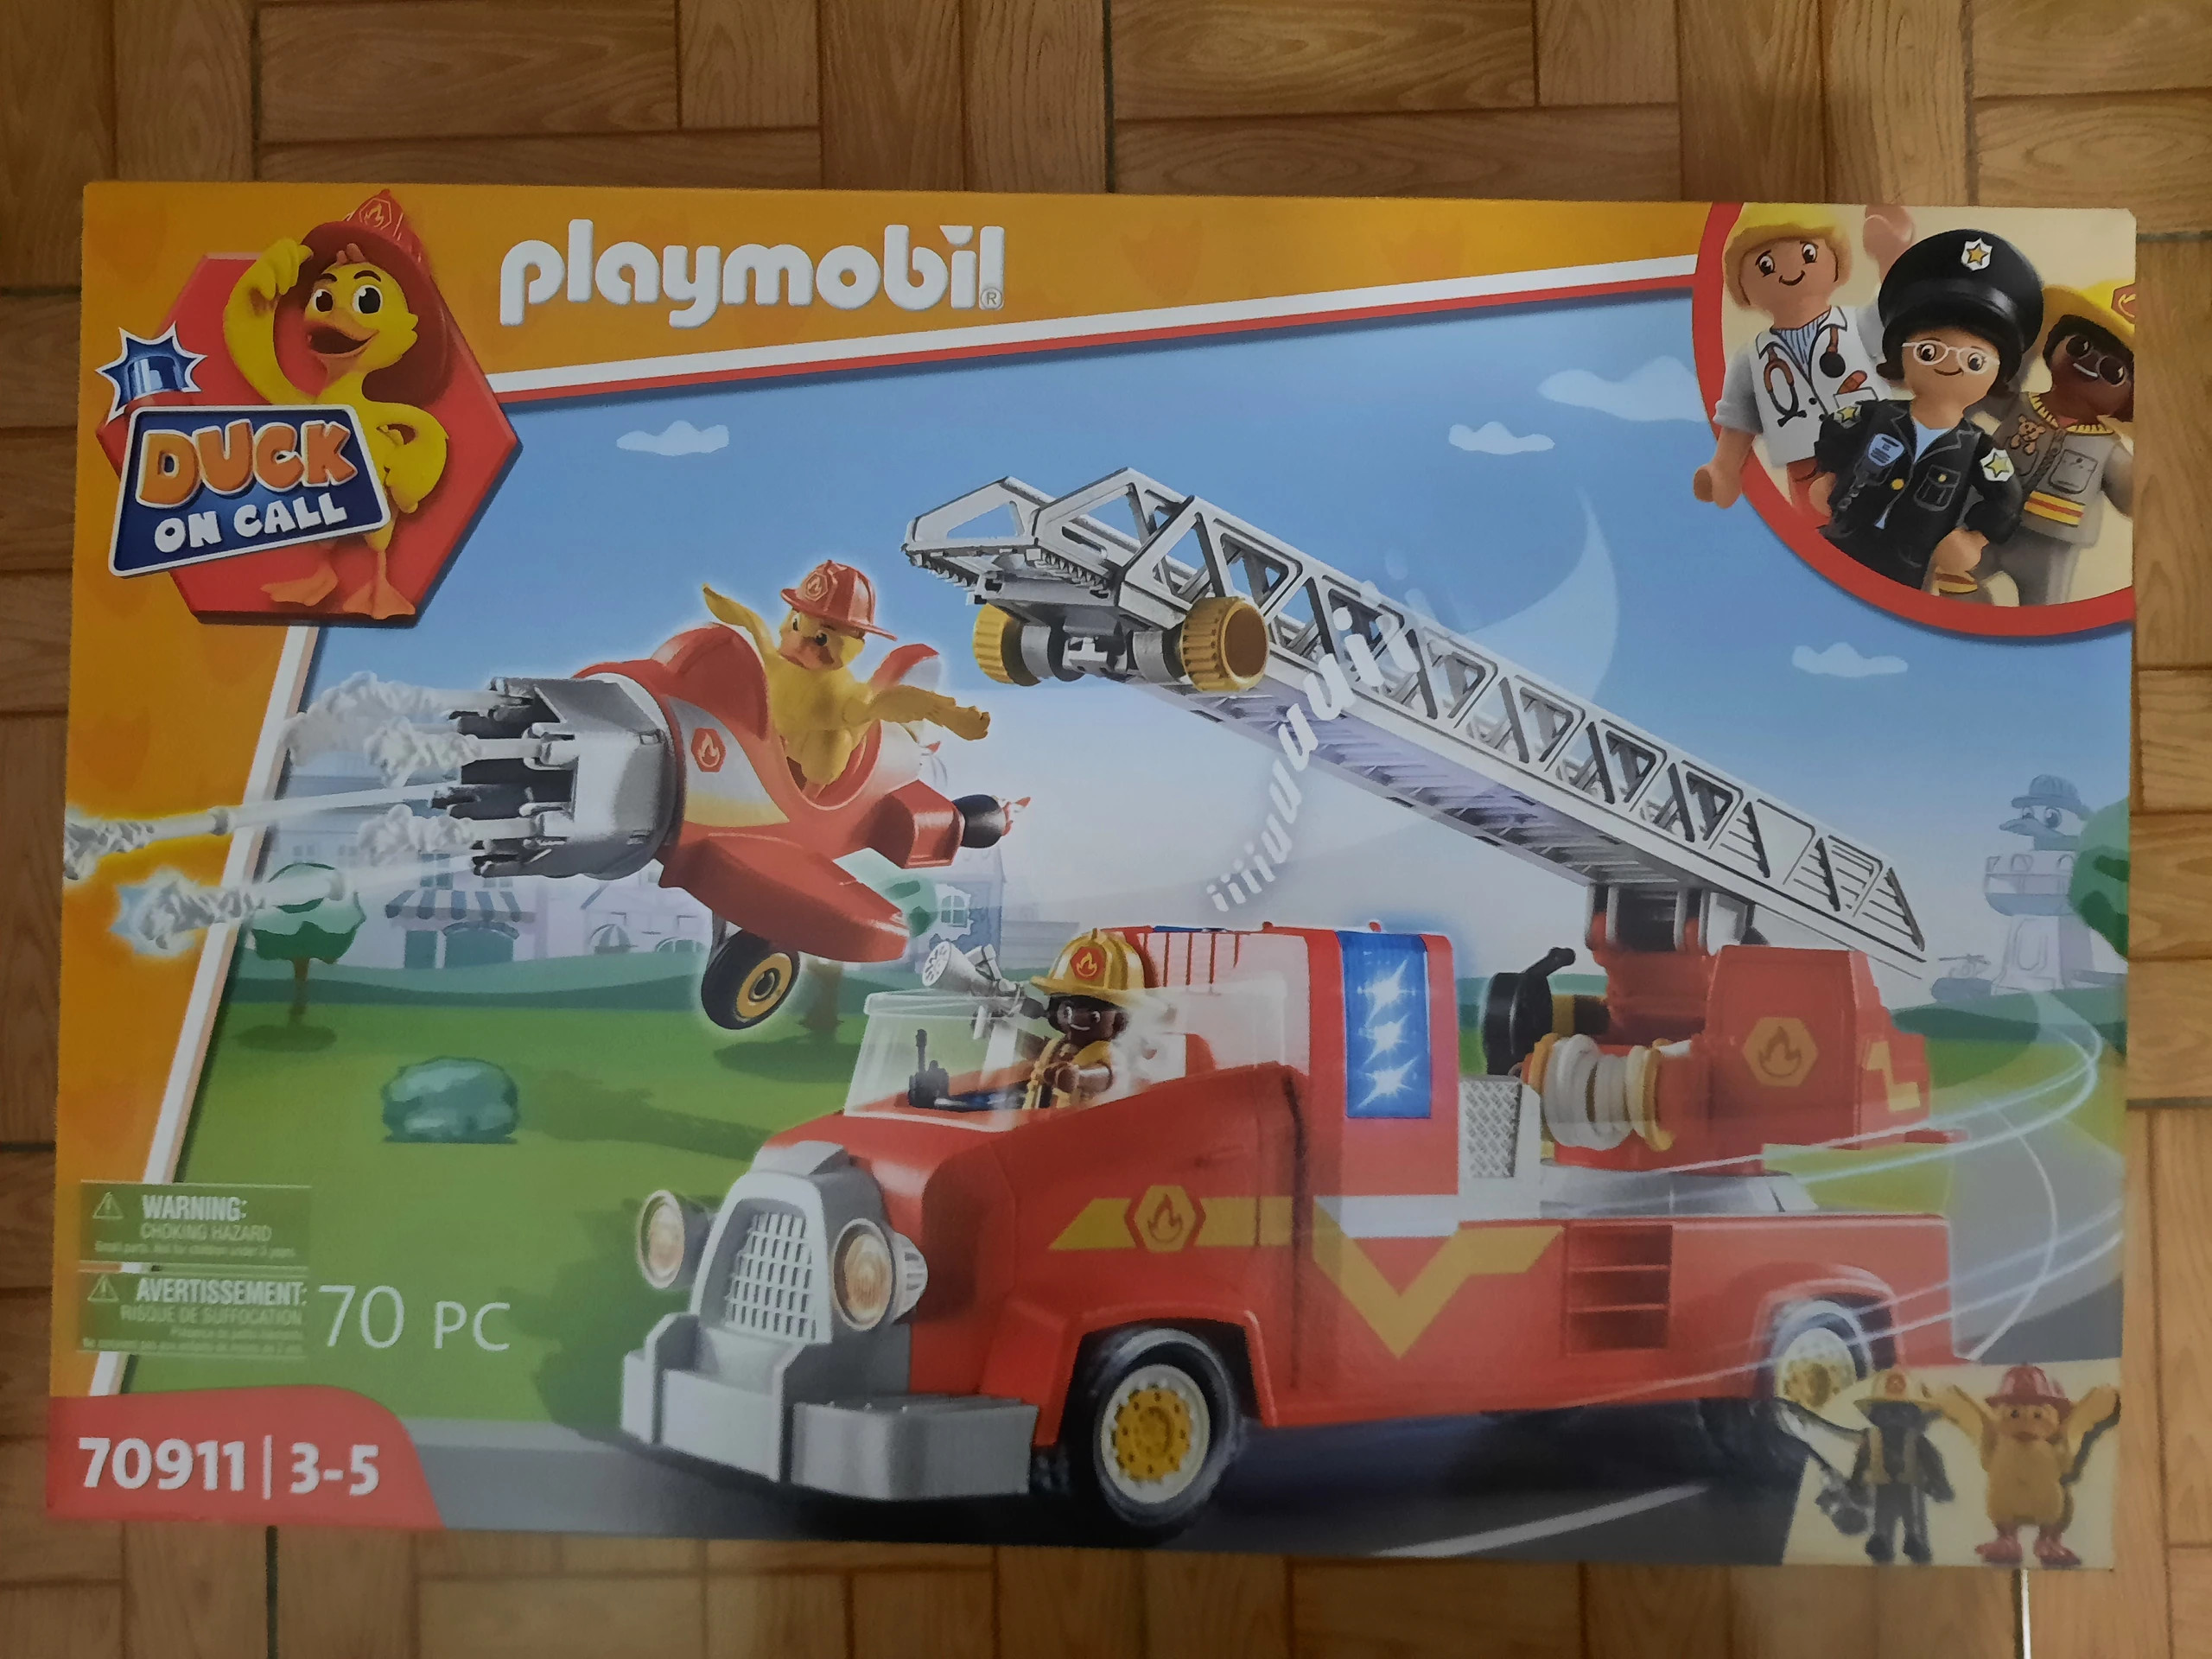 Duck on Call, Véhicule de Pompiers - Playmobile